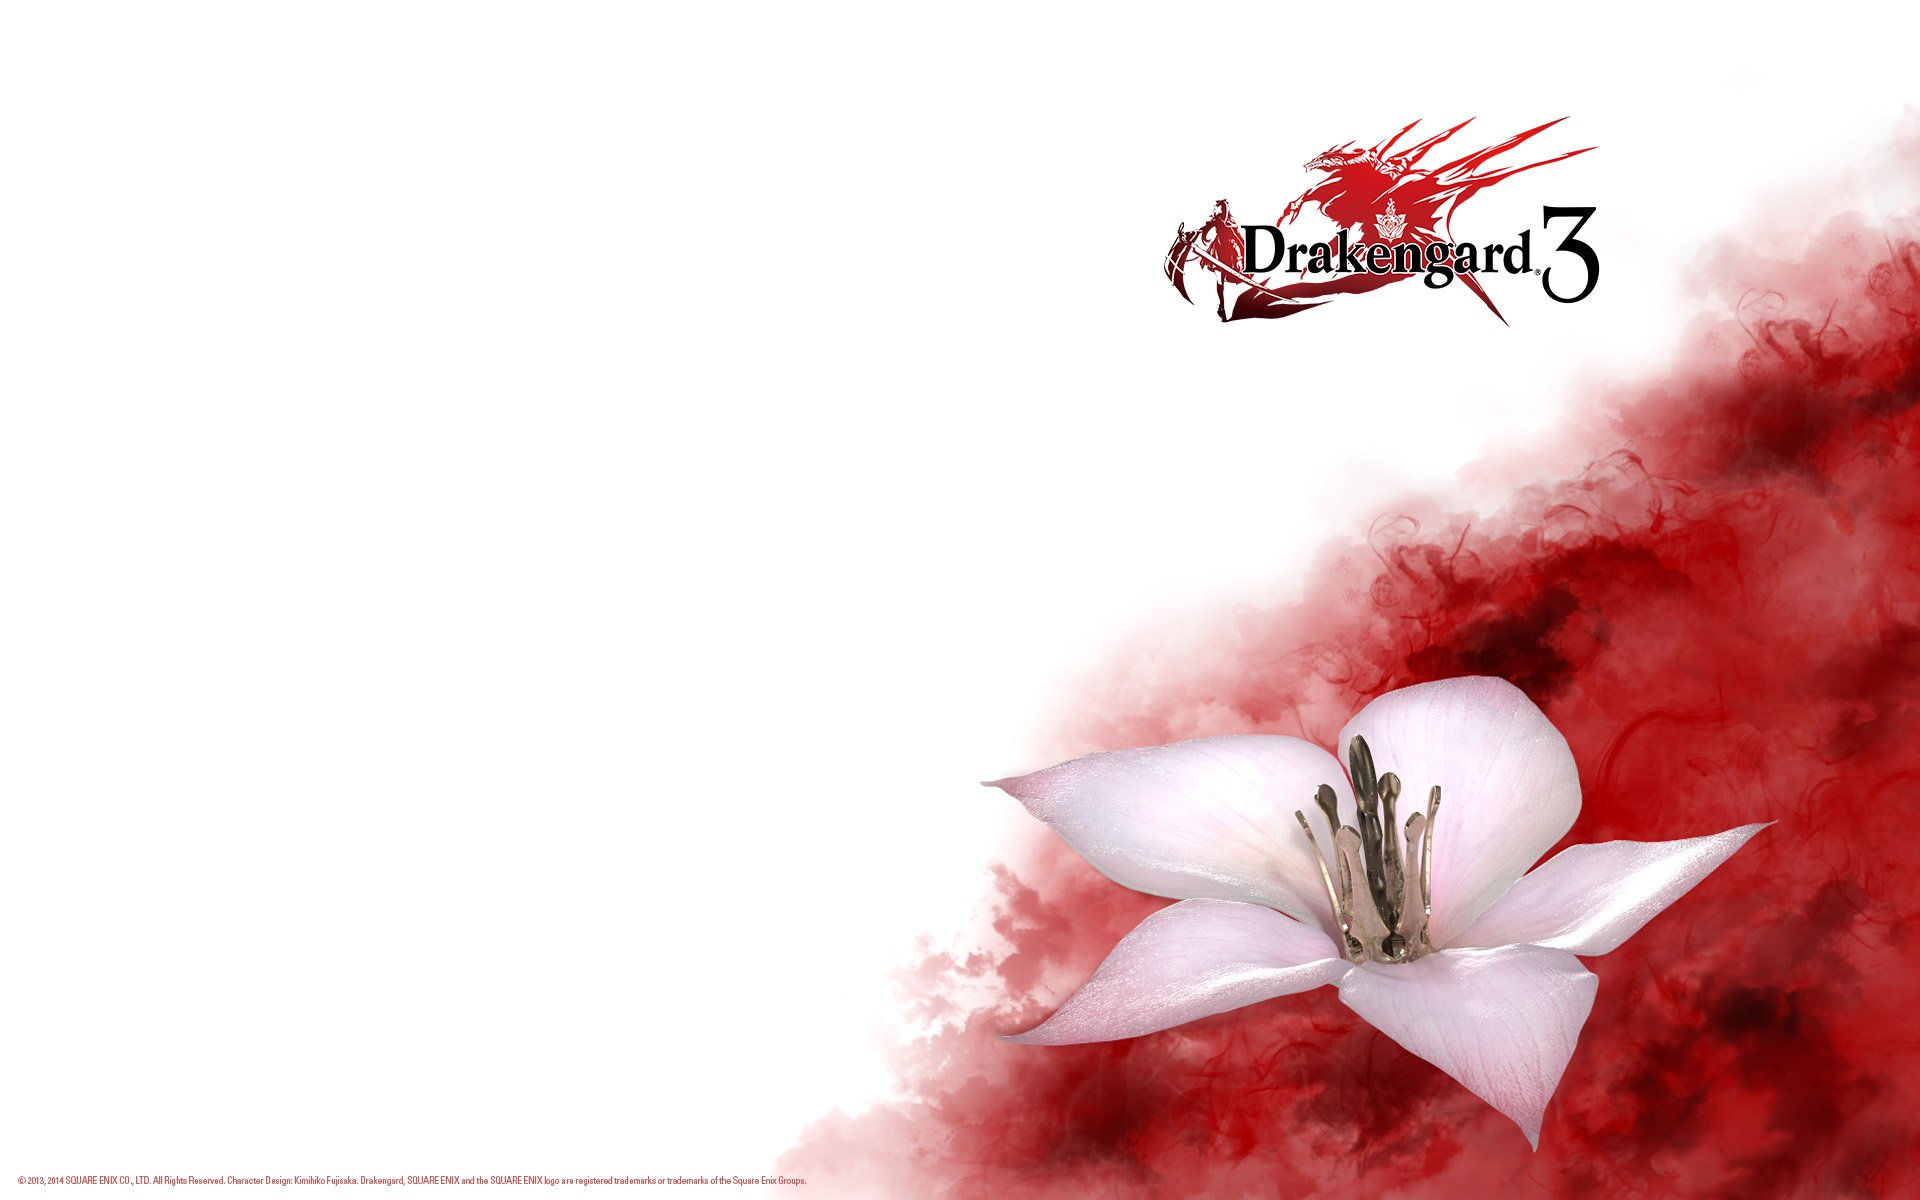 accord drakengard 3 download